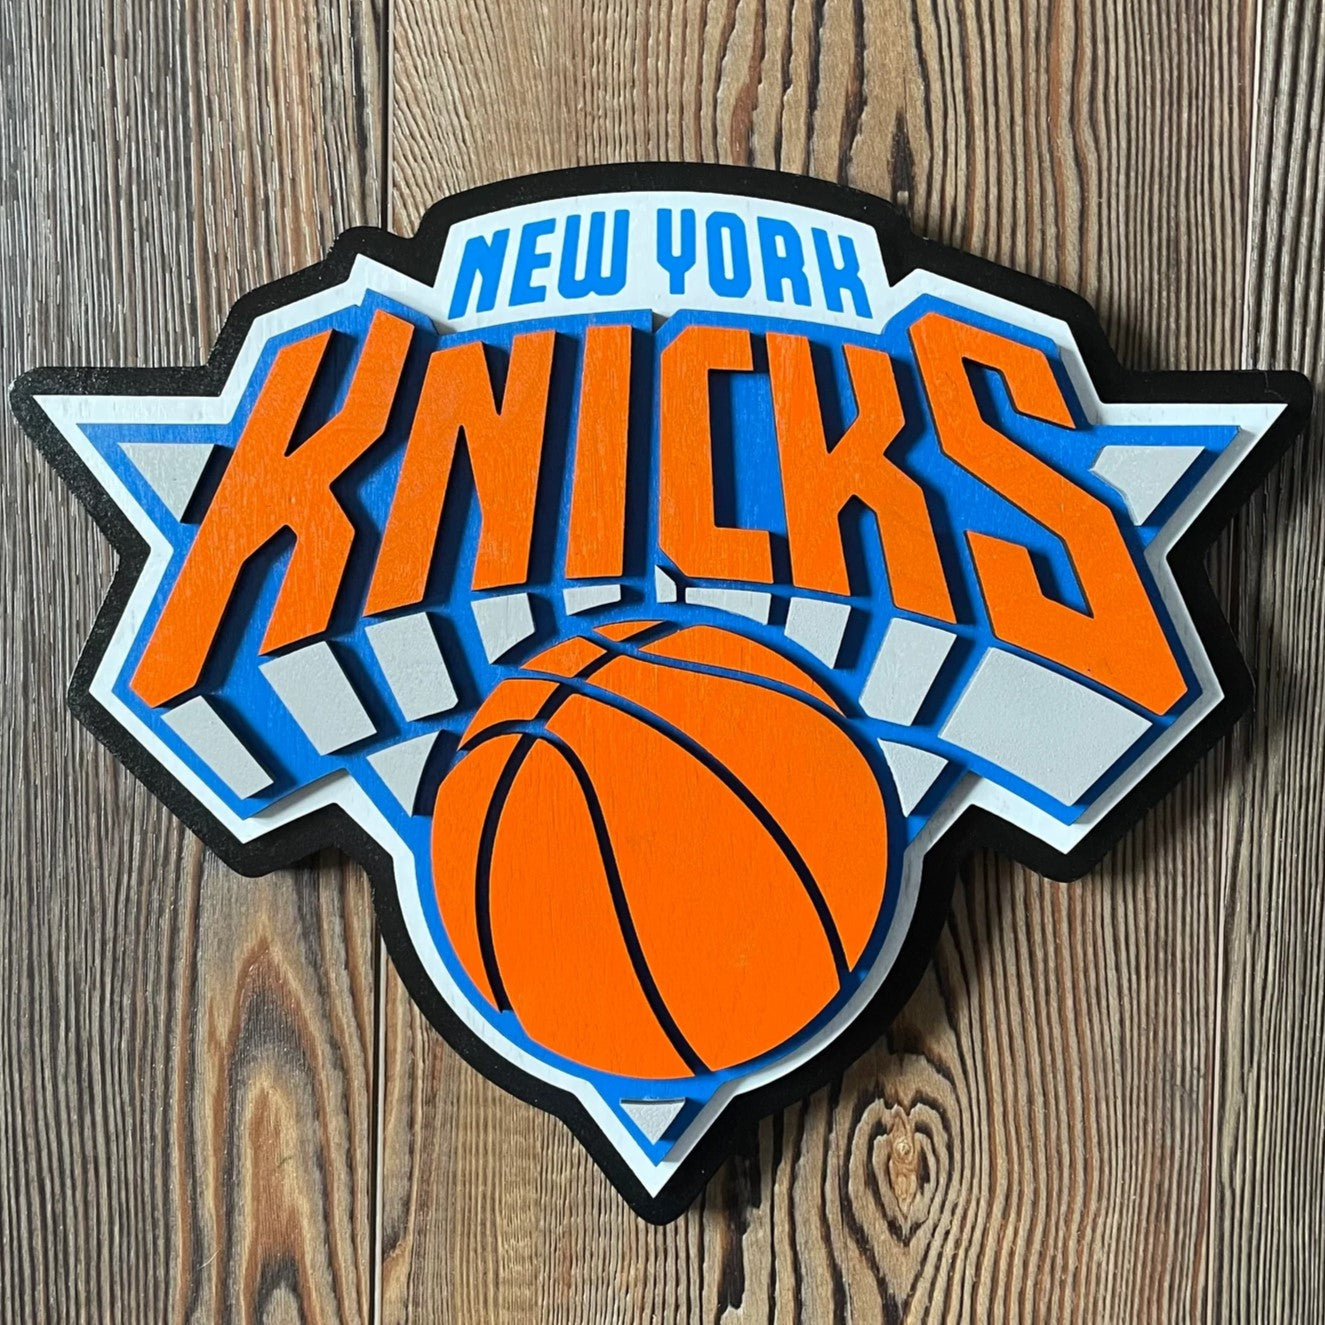 New York Knicks - Layered Wood Sign